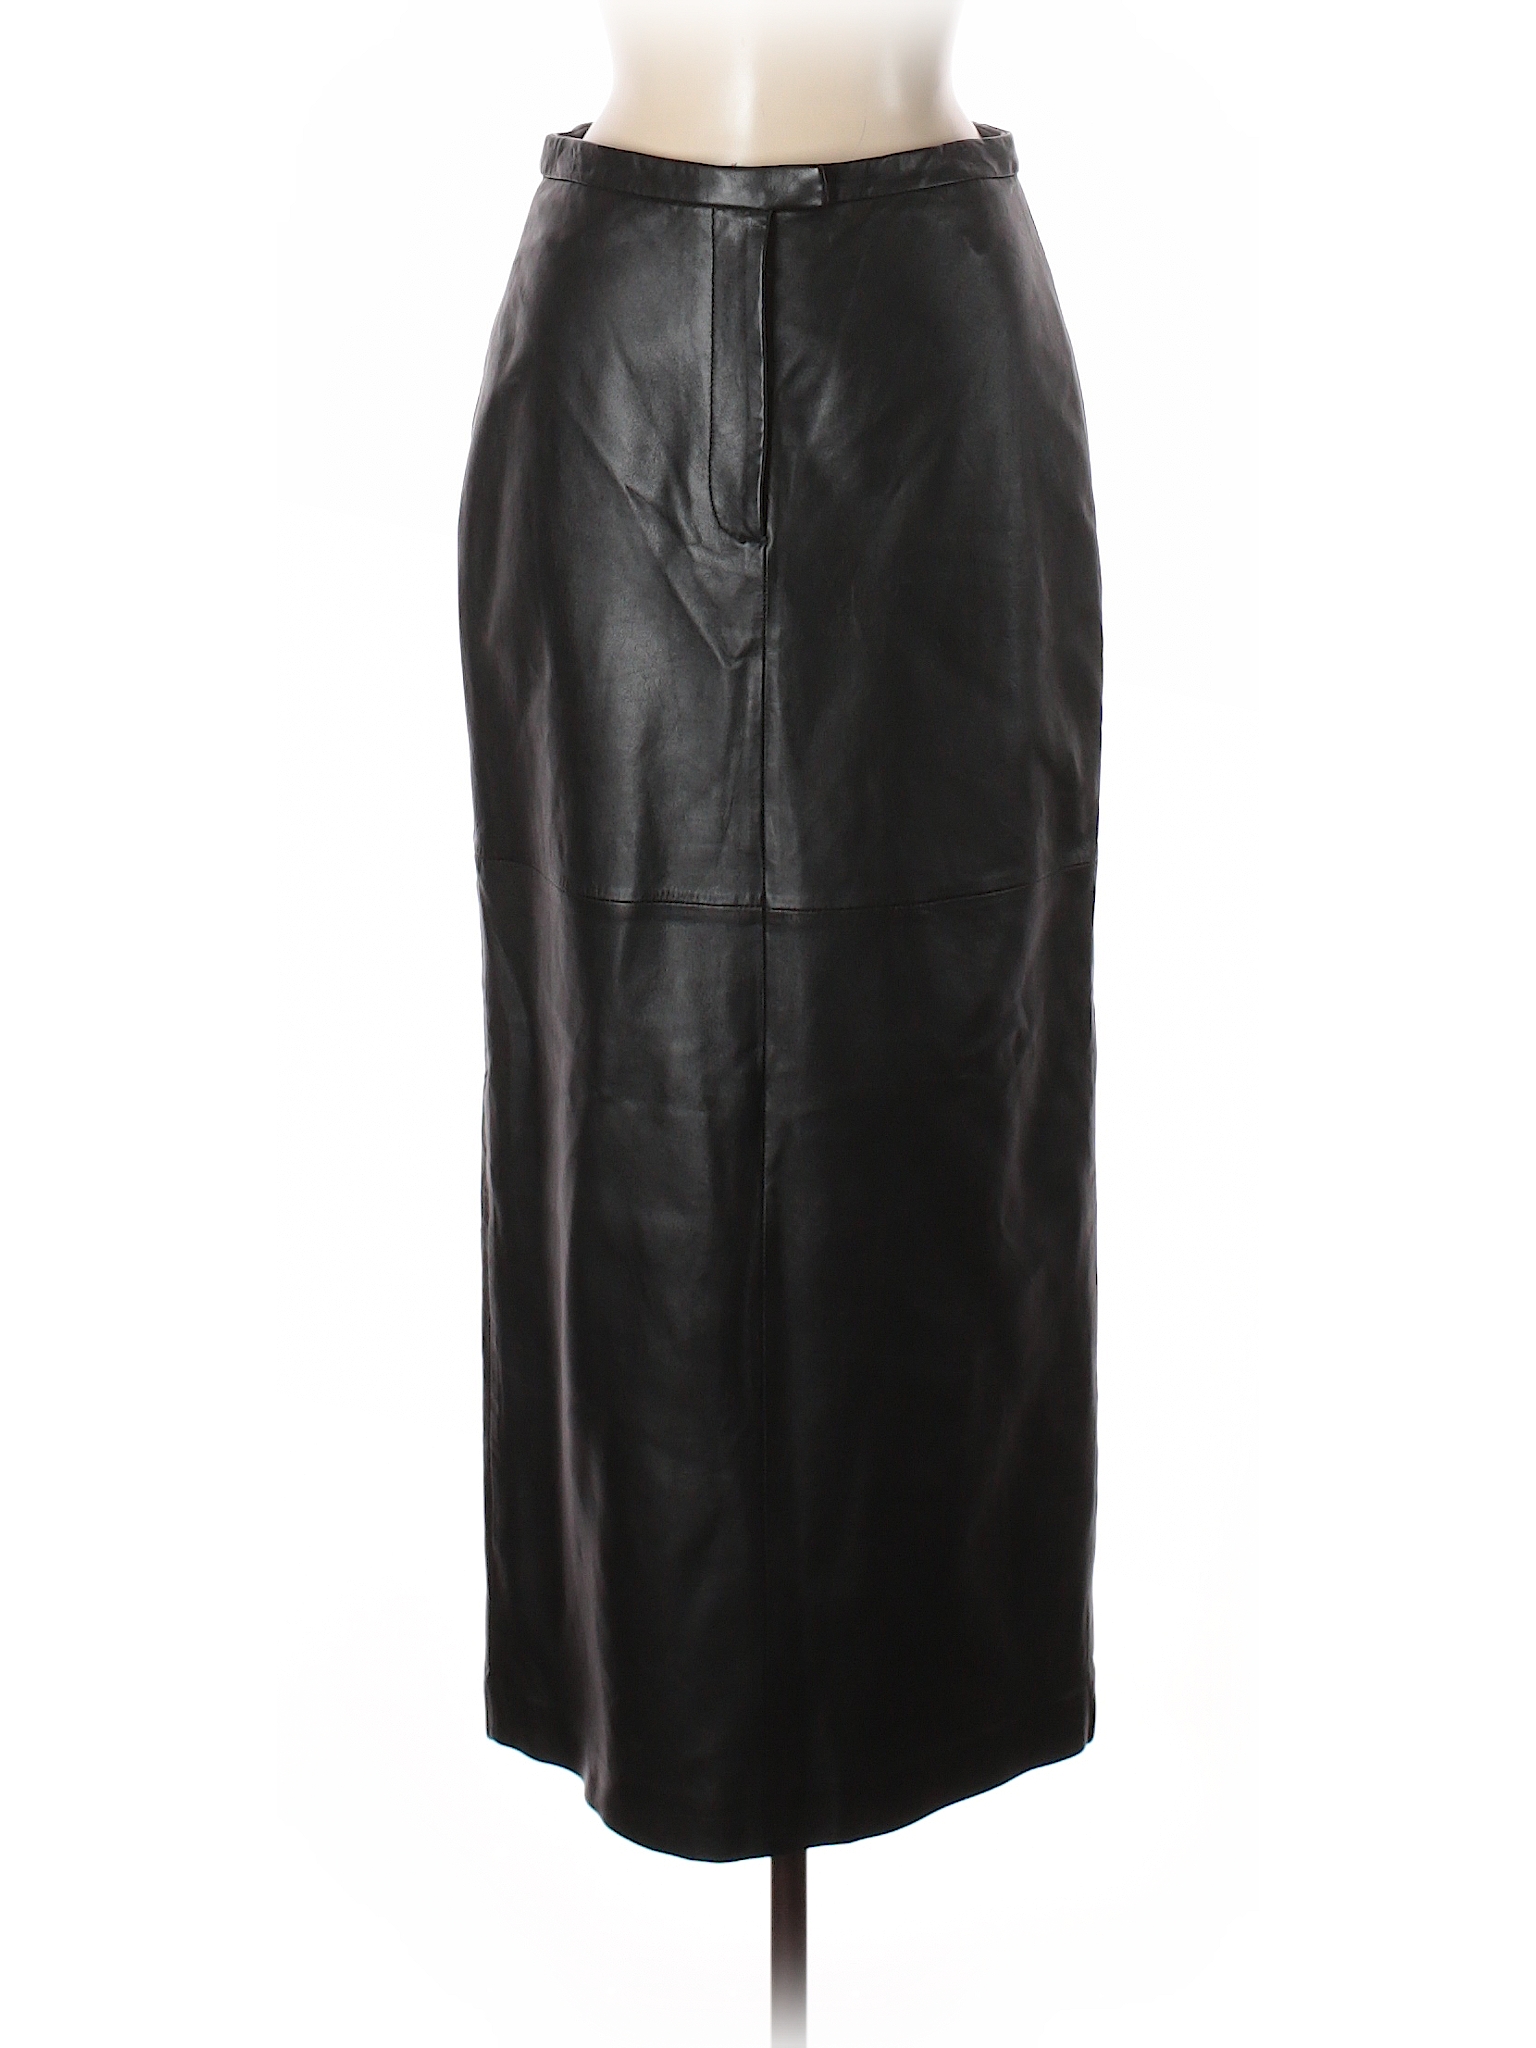 Margaret Godfrey 100% Leather Solid Black Leather Skirt Size 6 - 89% ...